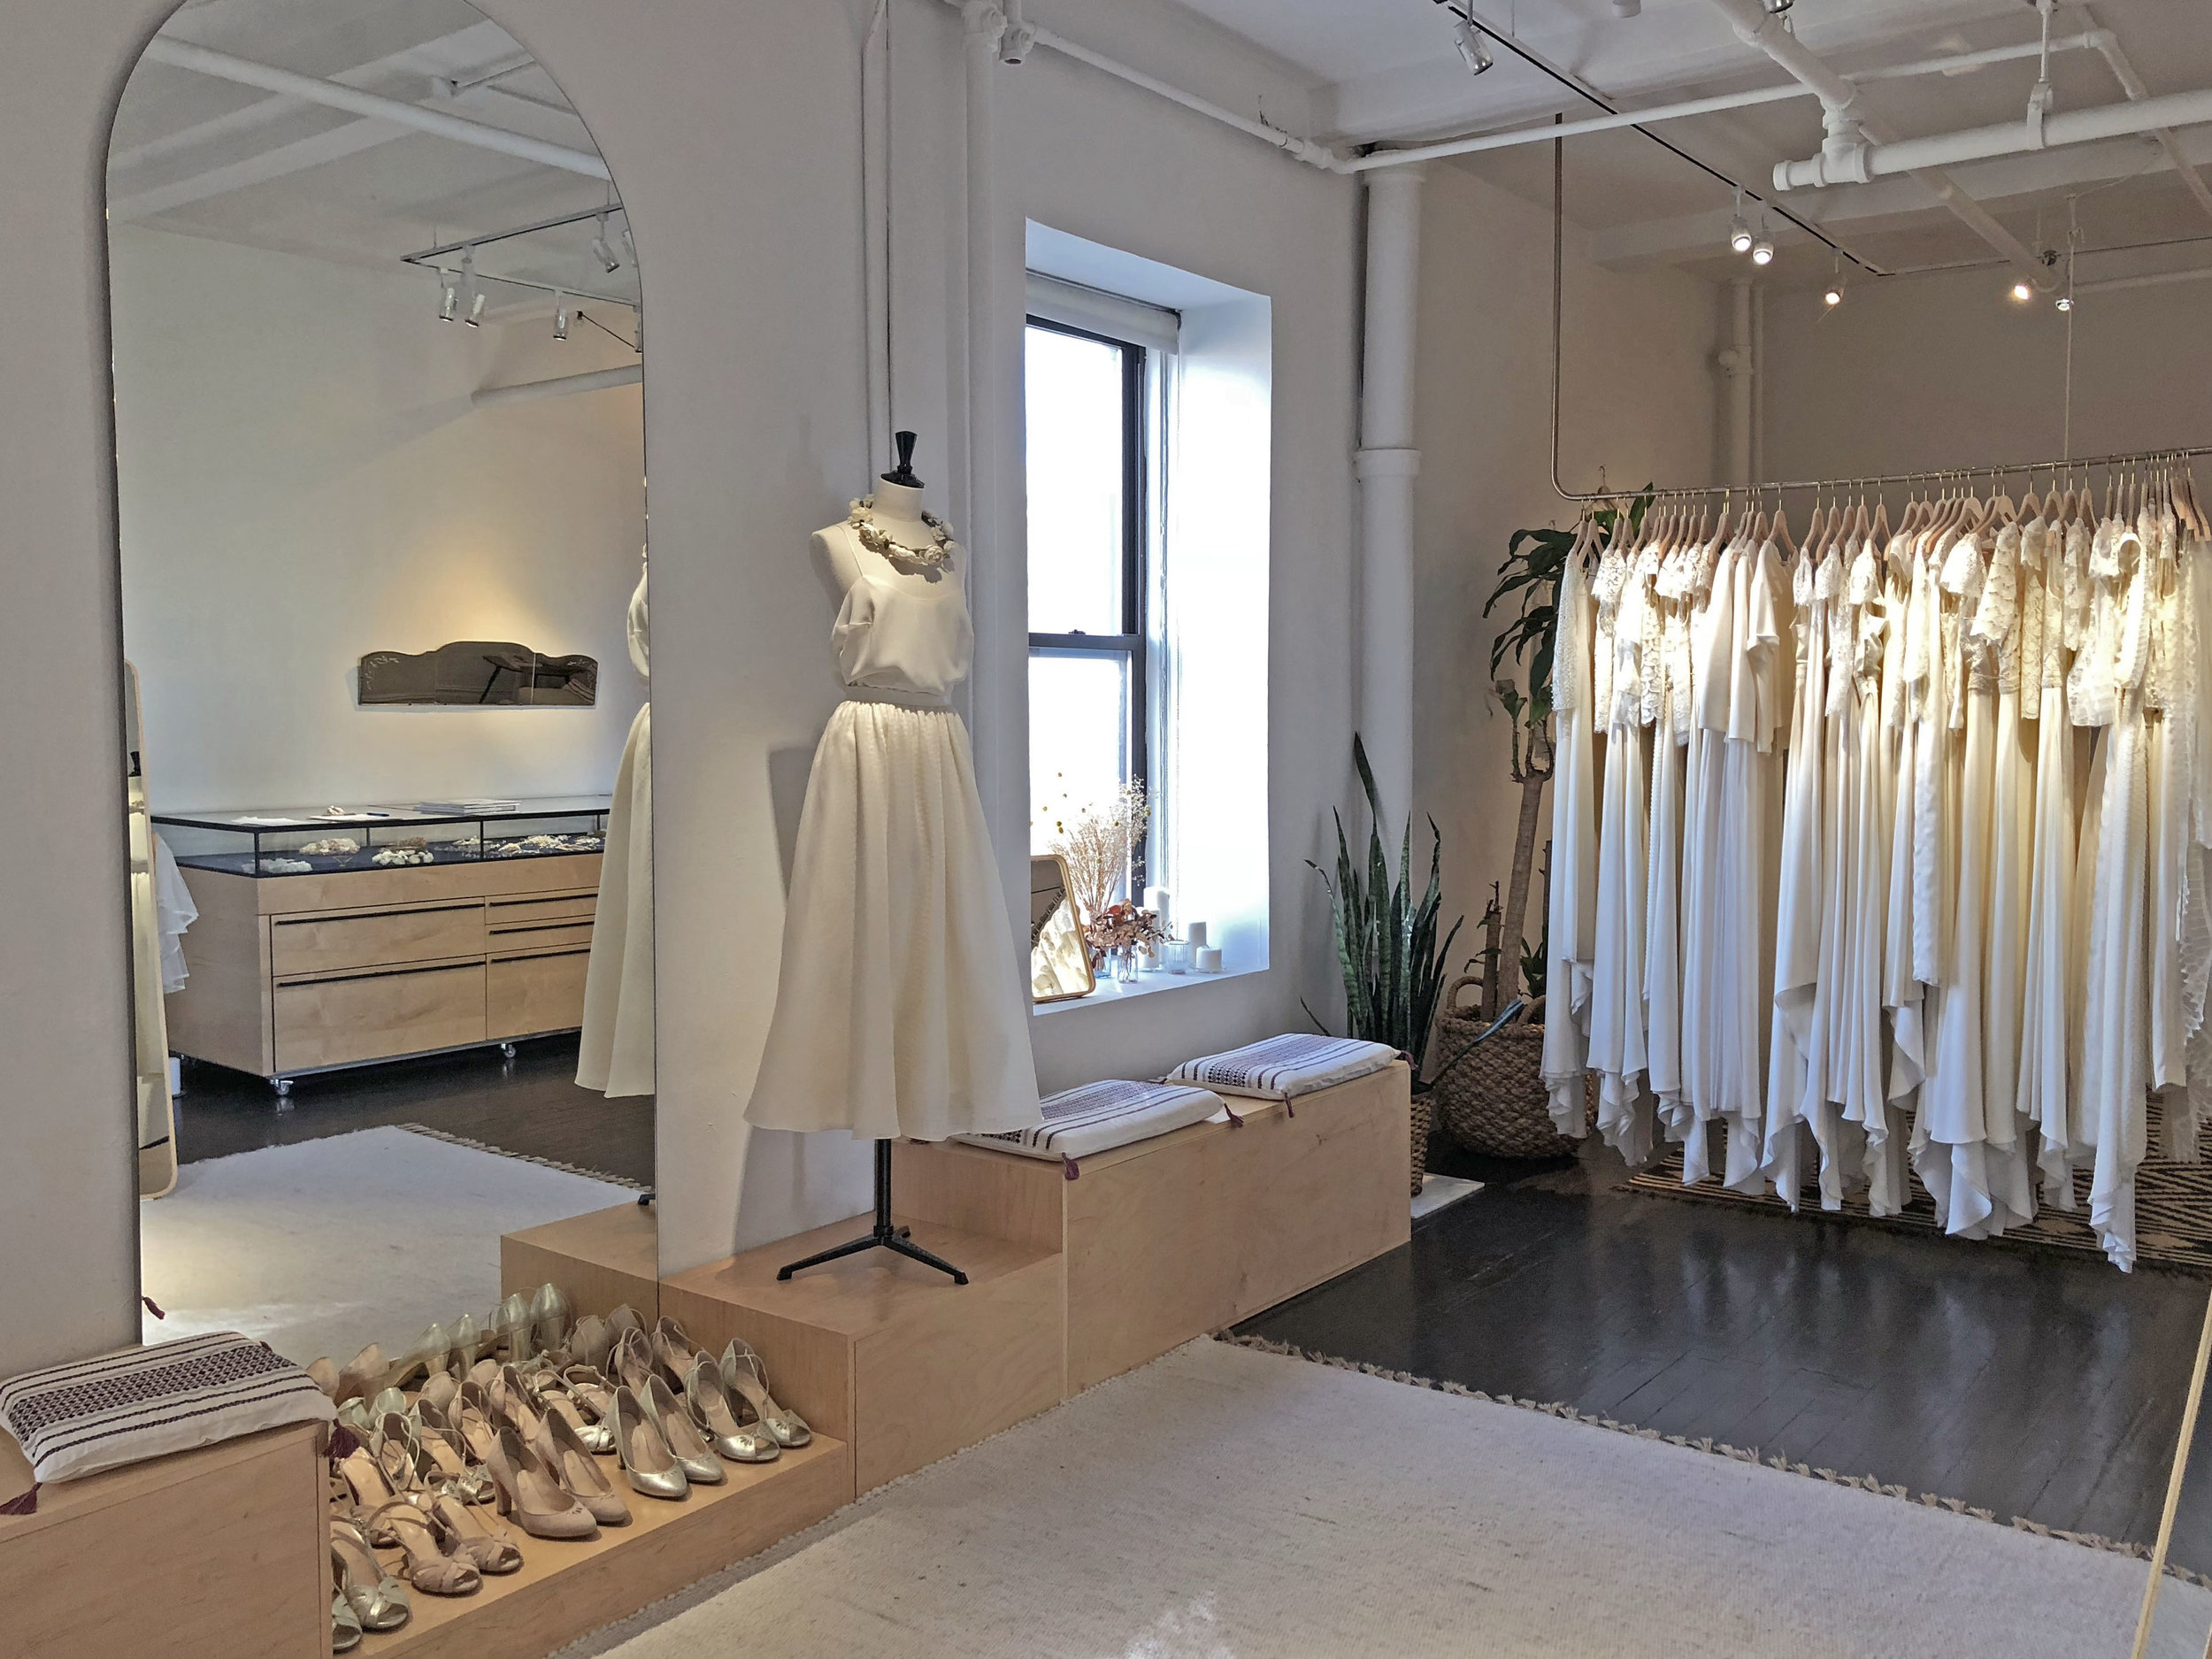 The Bridal Project designer Laure Sagazan to our Miami boutique